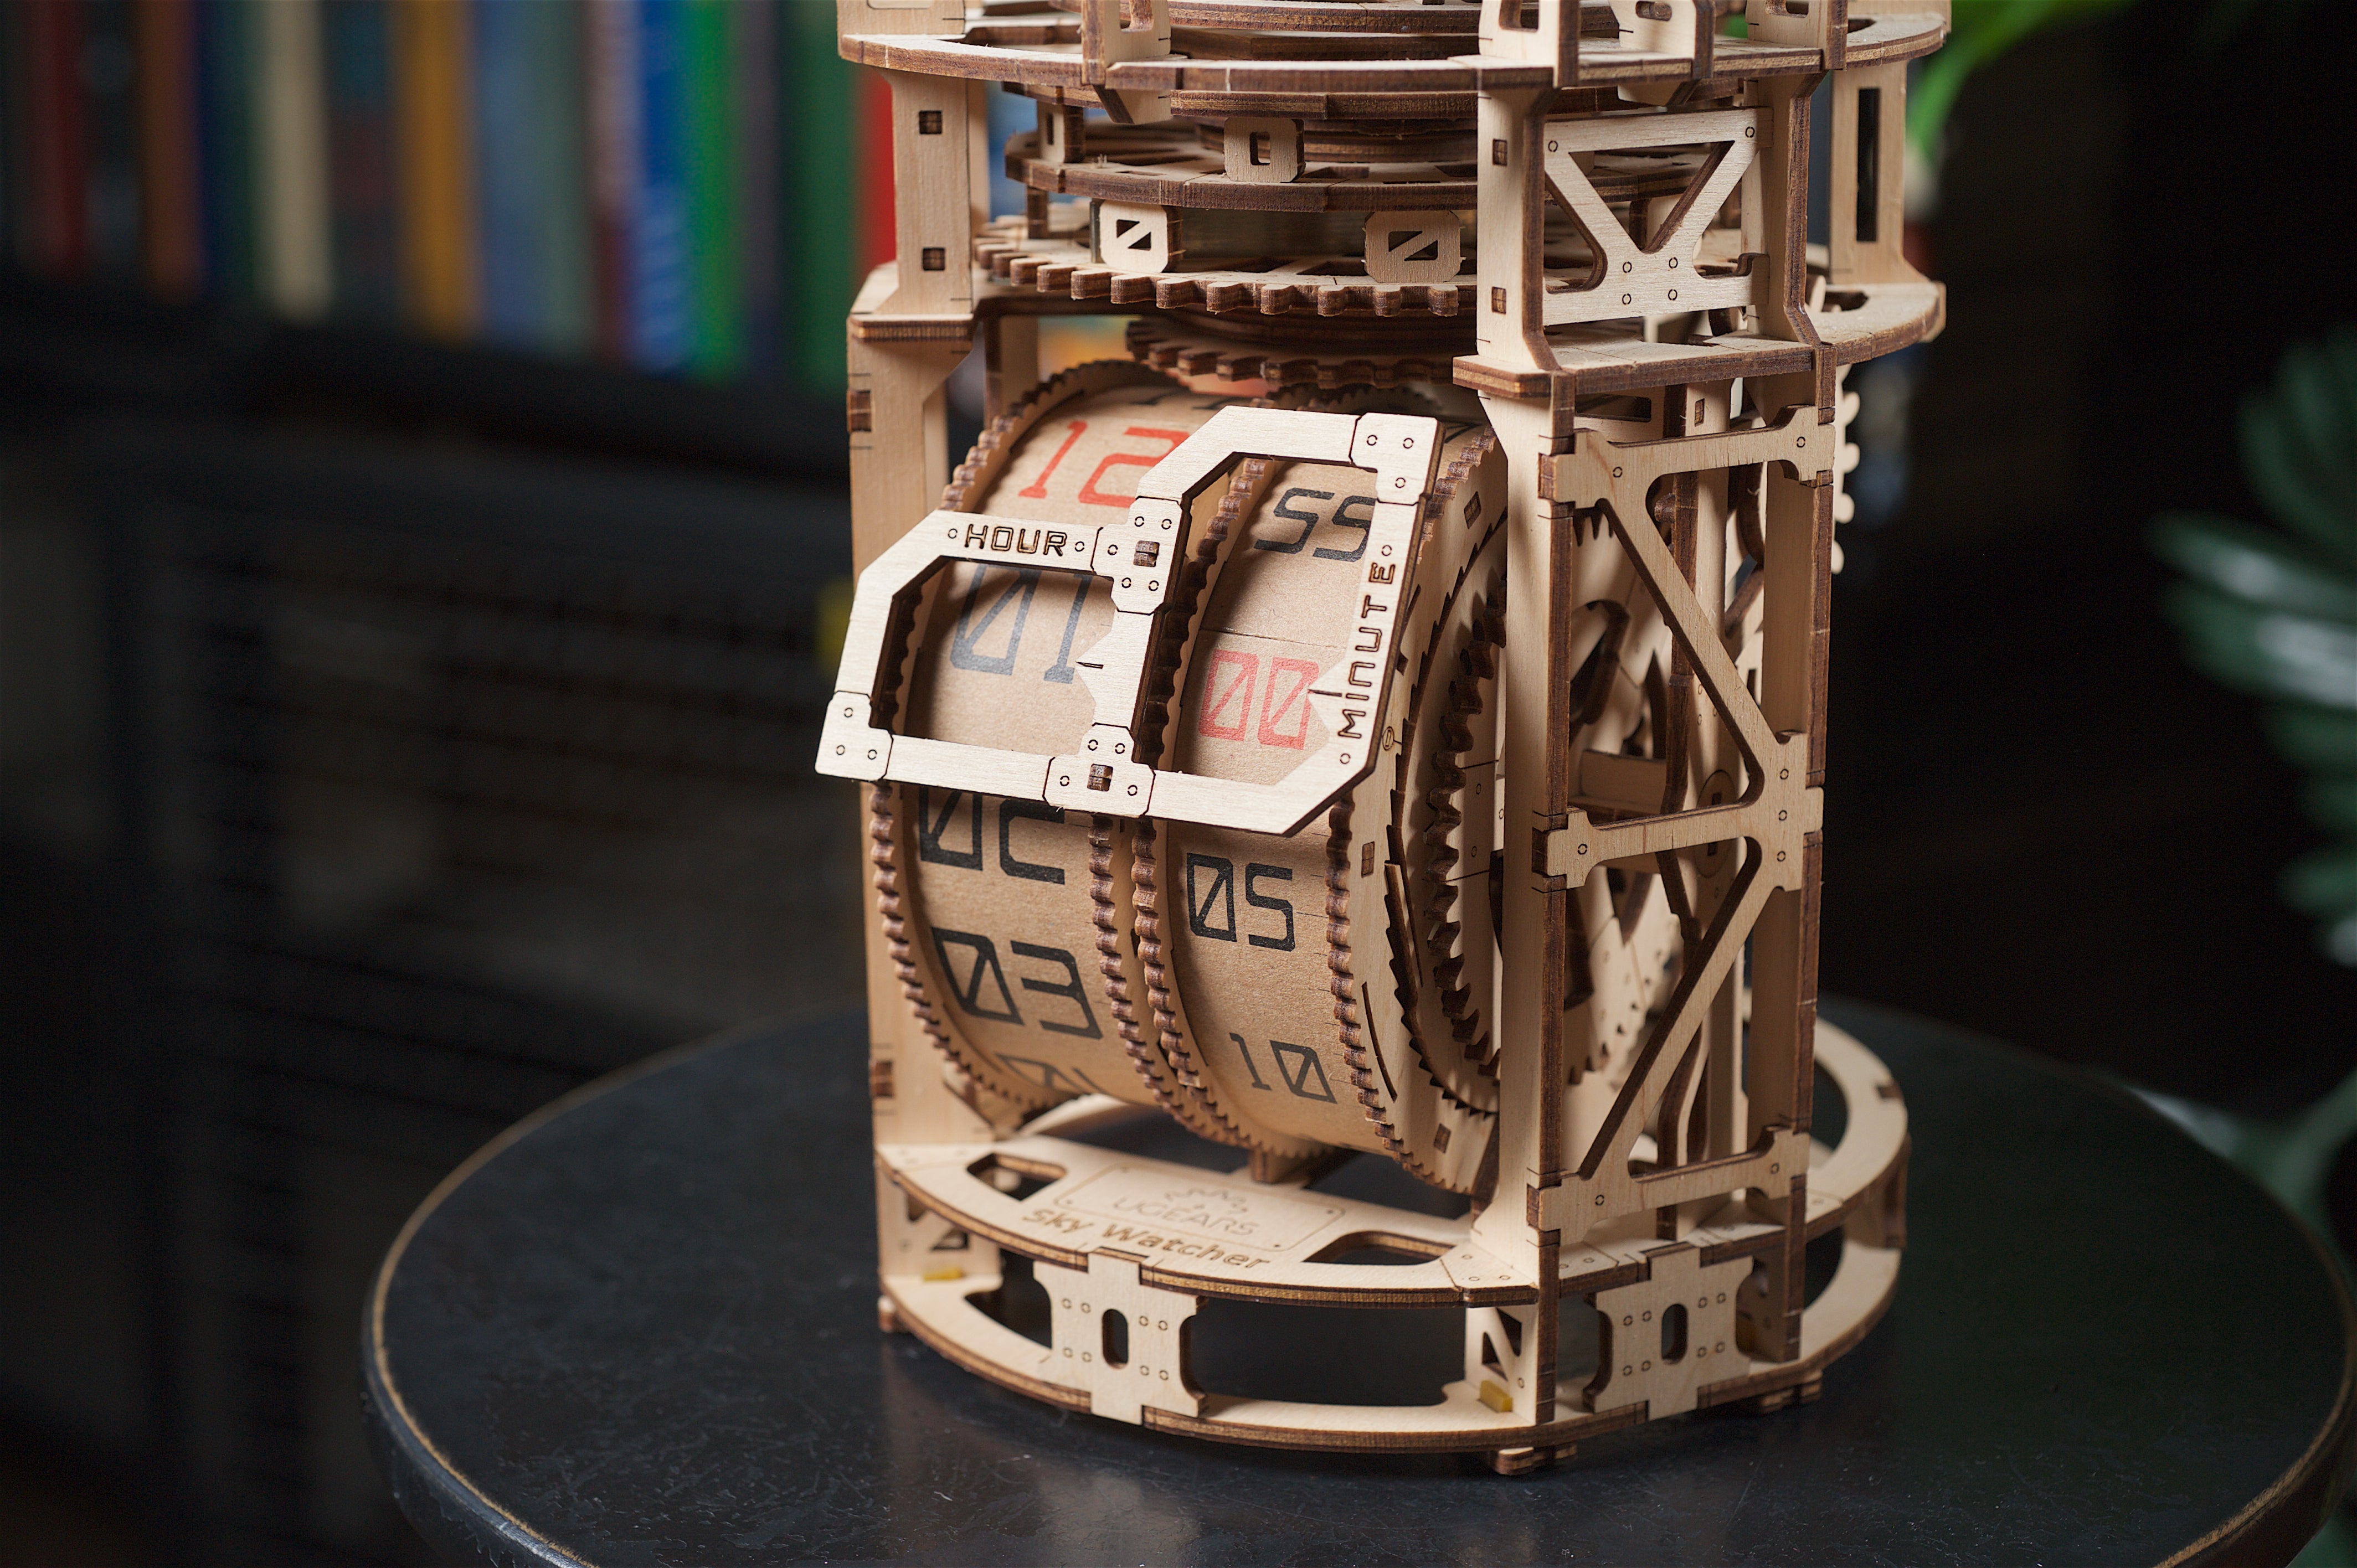 UGEARS Tourbillon Table Clock Kit - Sky Watcher 3D Wooden Puzzles  Mechanical Clock Kit Idea DeskWood Clock Kits to Build - 3D Puzzles Model  Kits for